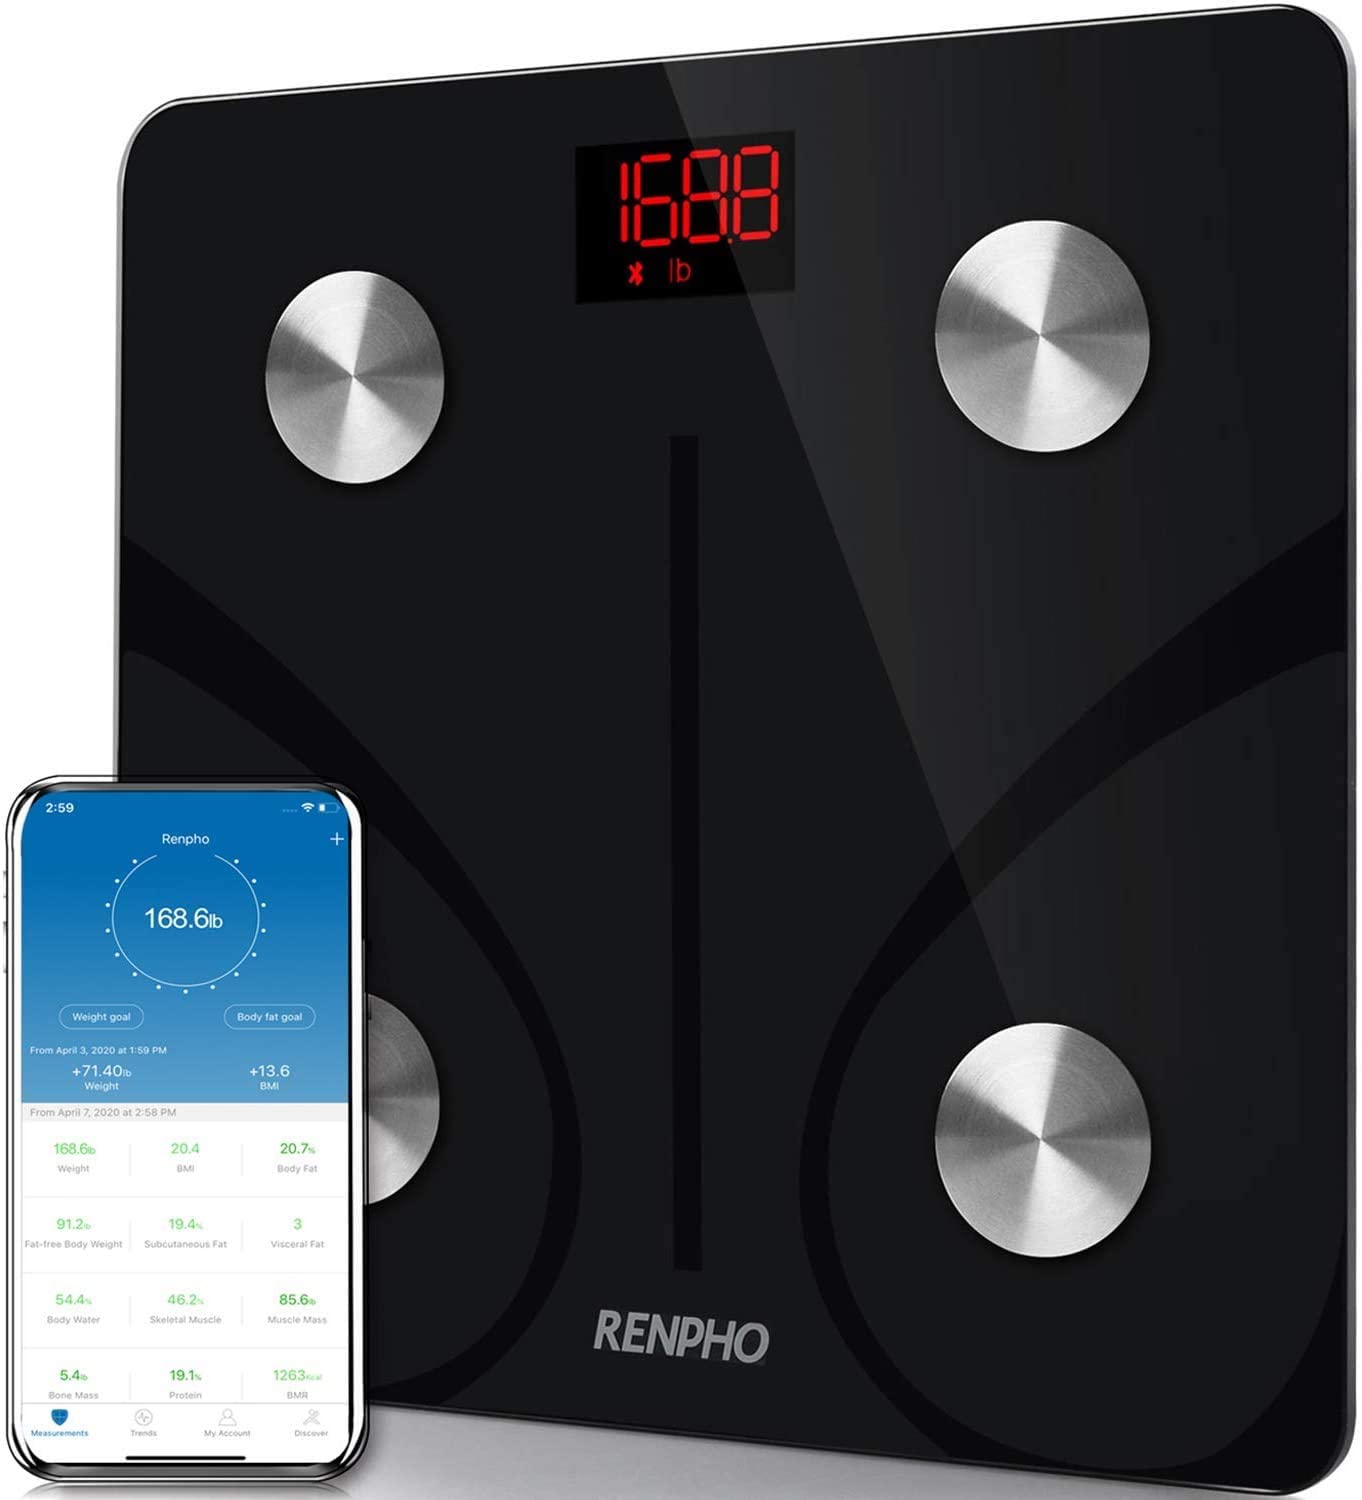 RENPHO Auto Calibration BMI Bathroom Scale